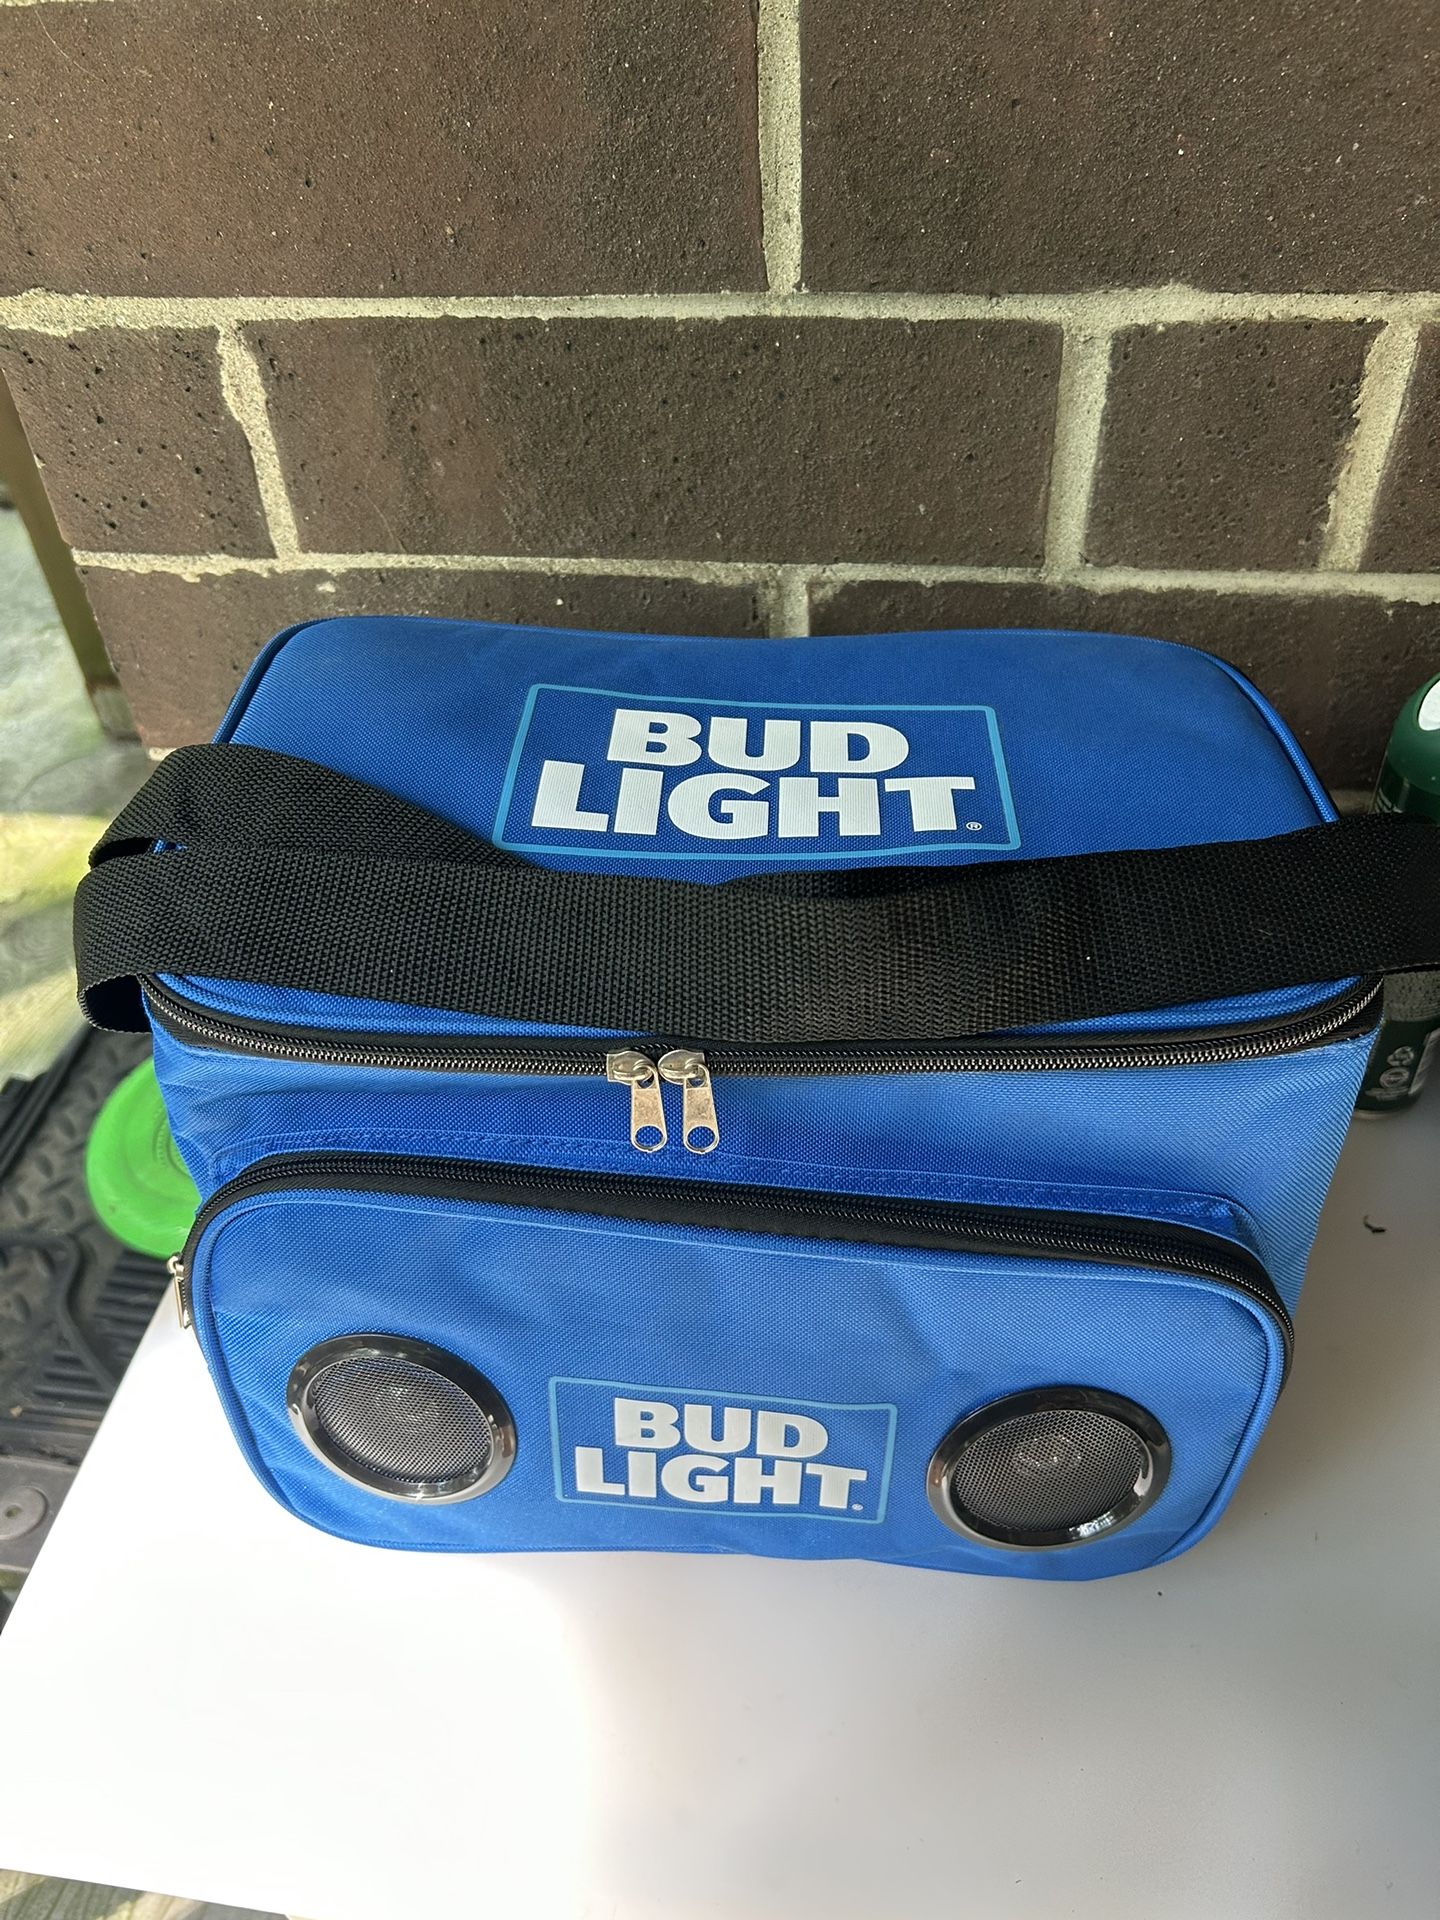 BUD LIGHT Cooler Bag with BT speakers - Brand New